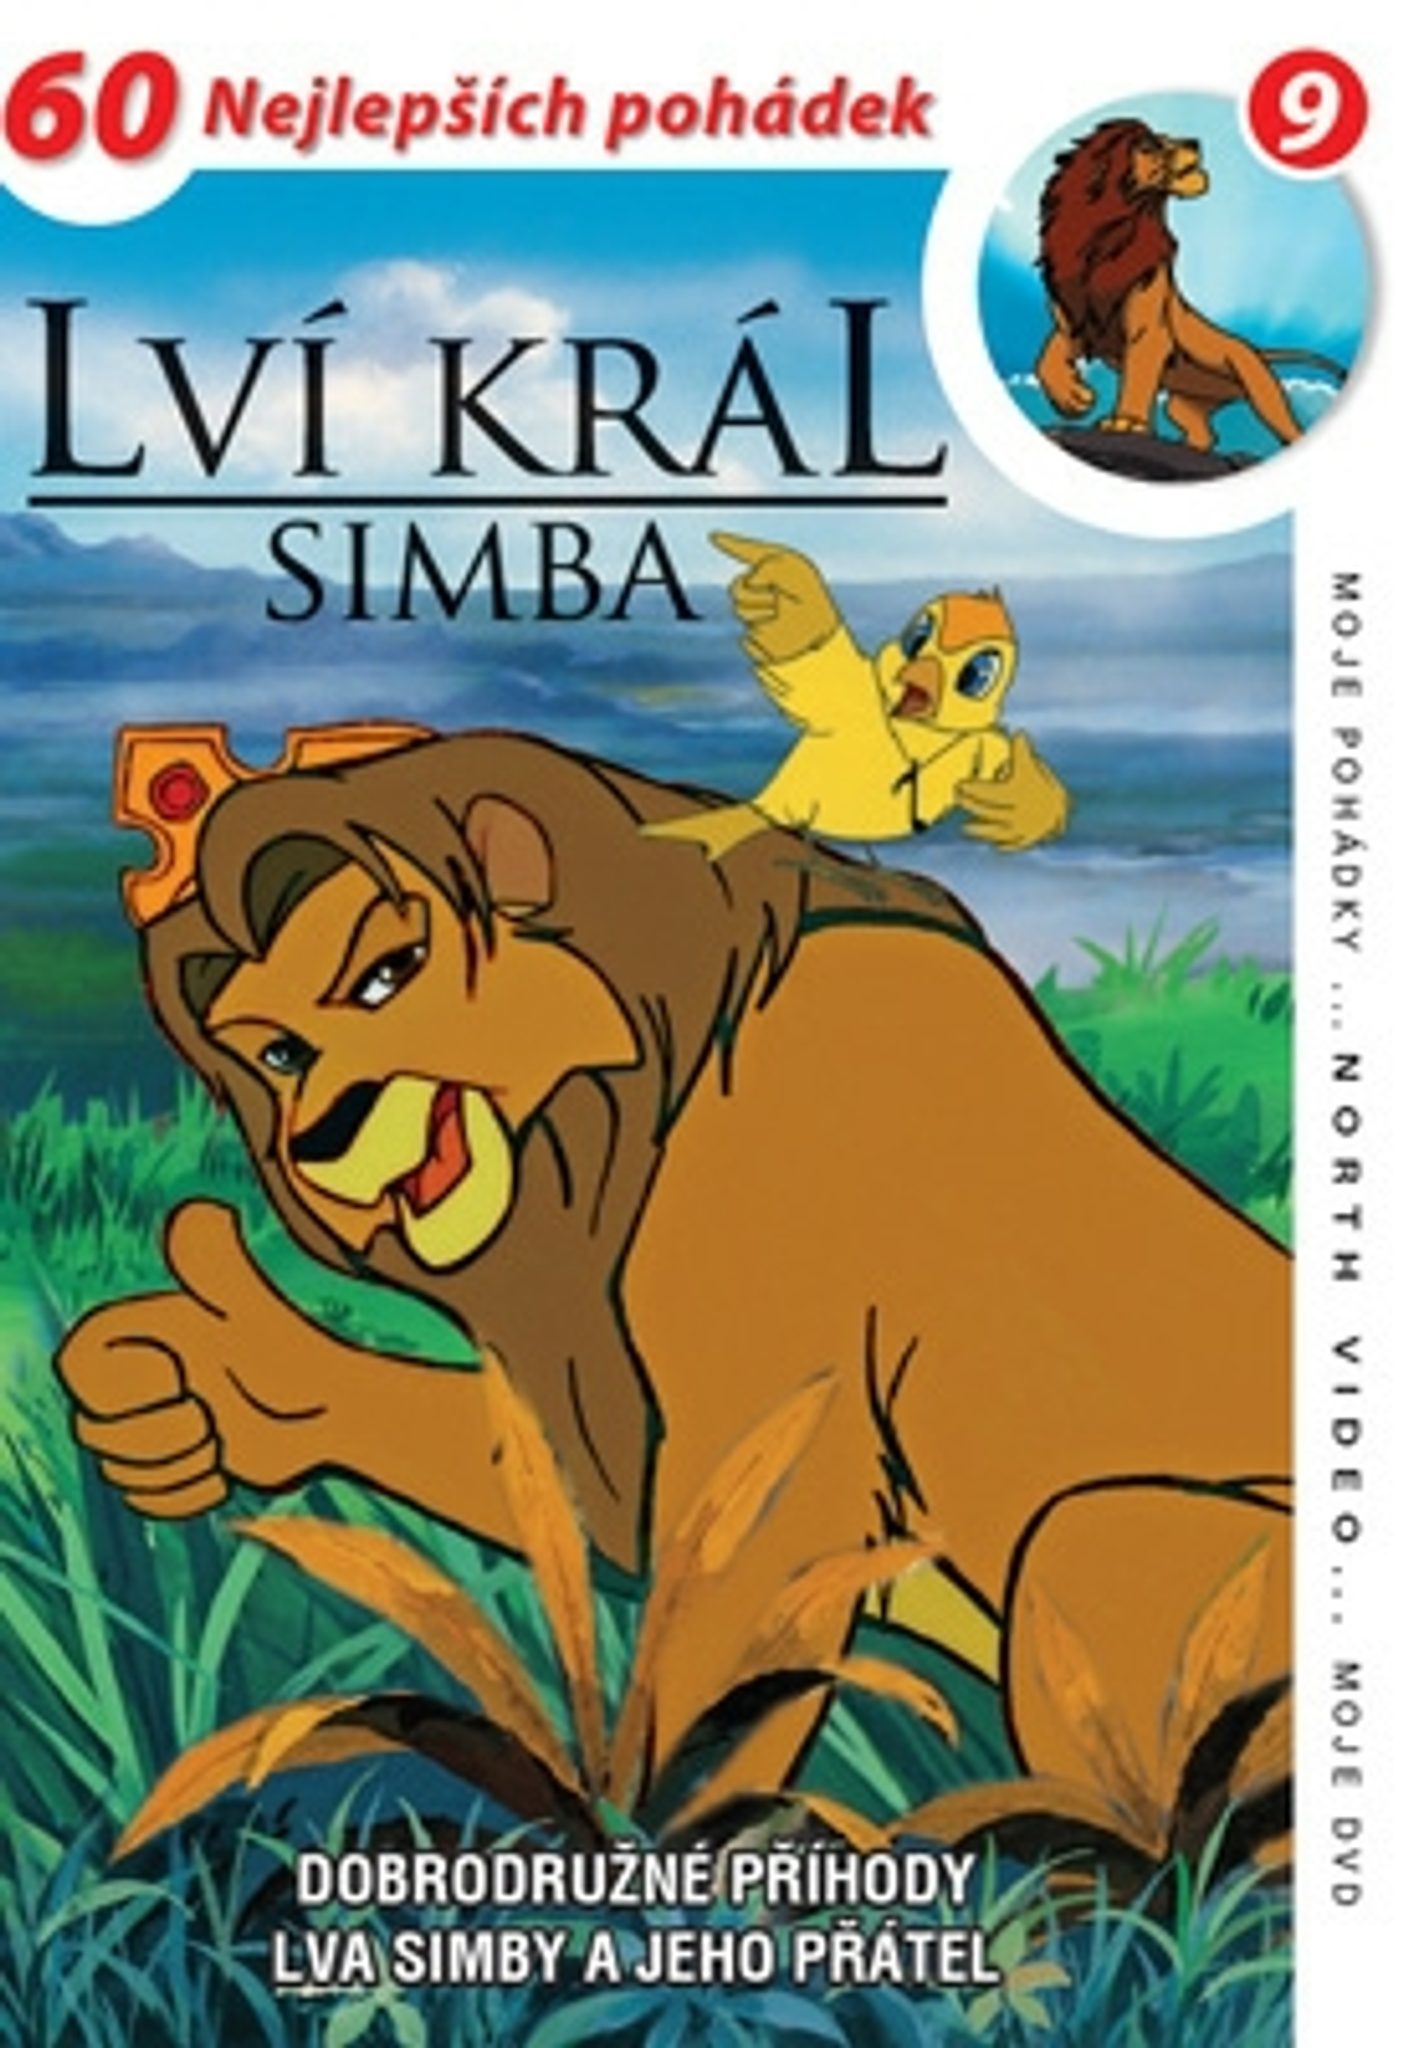 DVD Lv krl - Simba 09